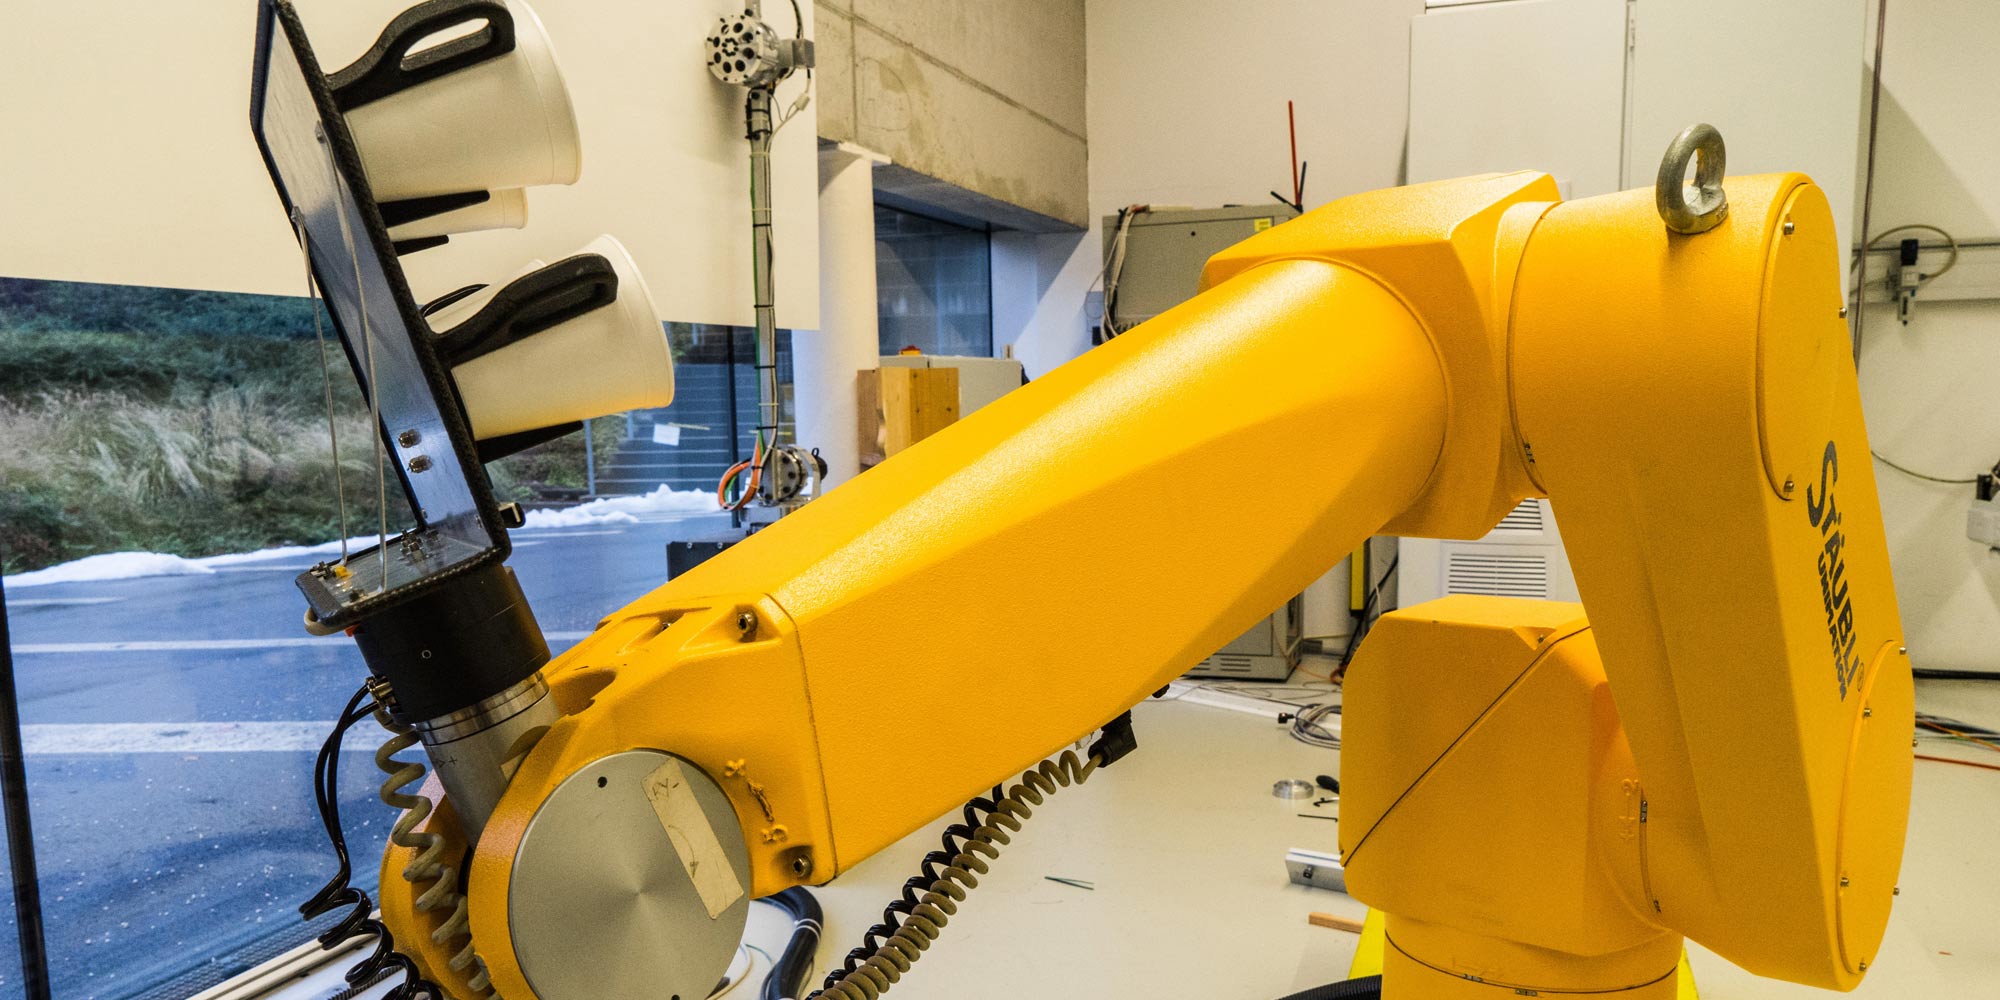 Robots in Action, Institute of Robotics, Johannes Kepler University Linz (AT)